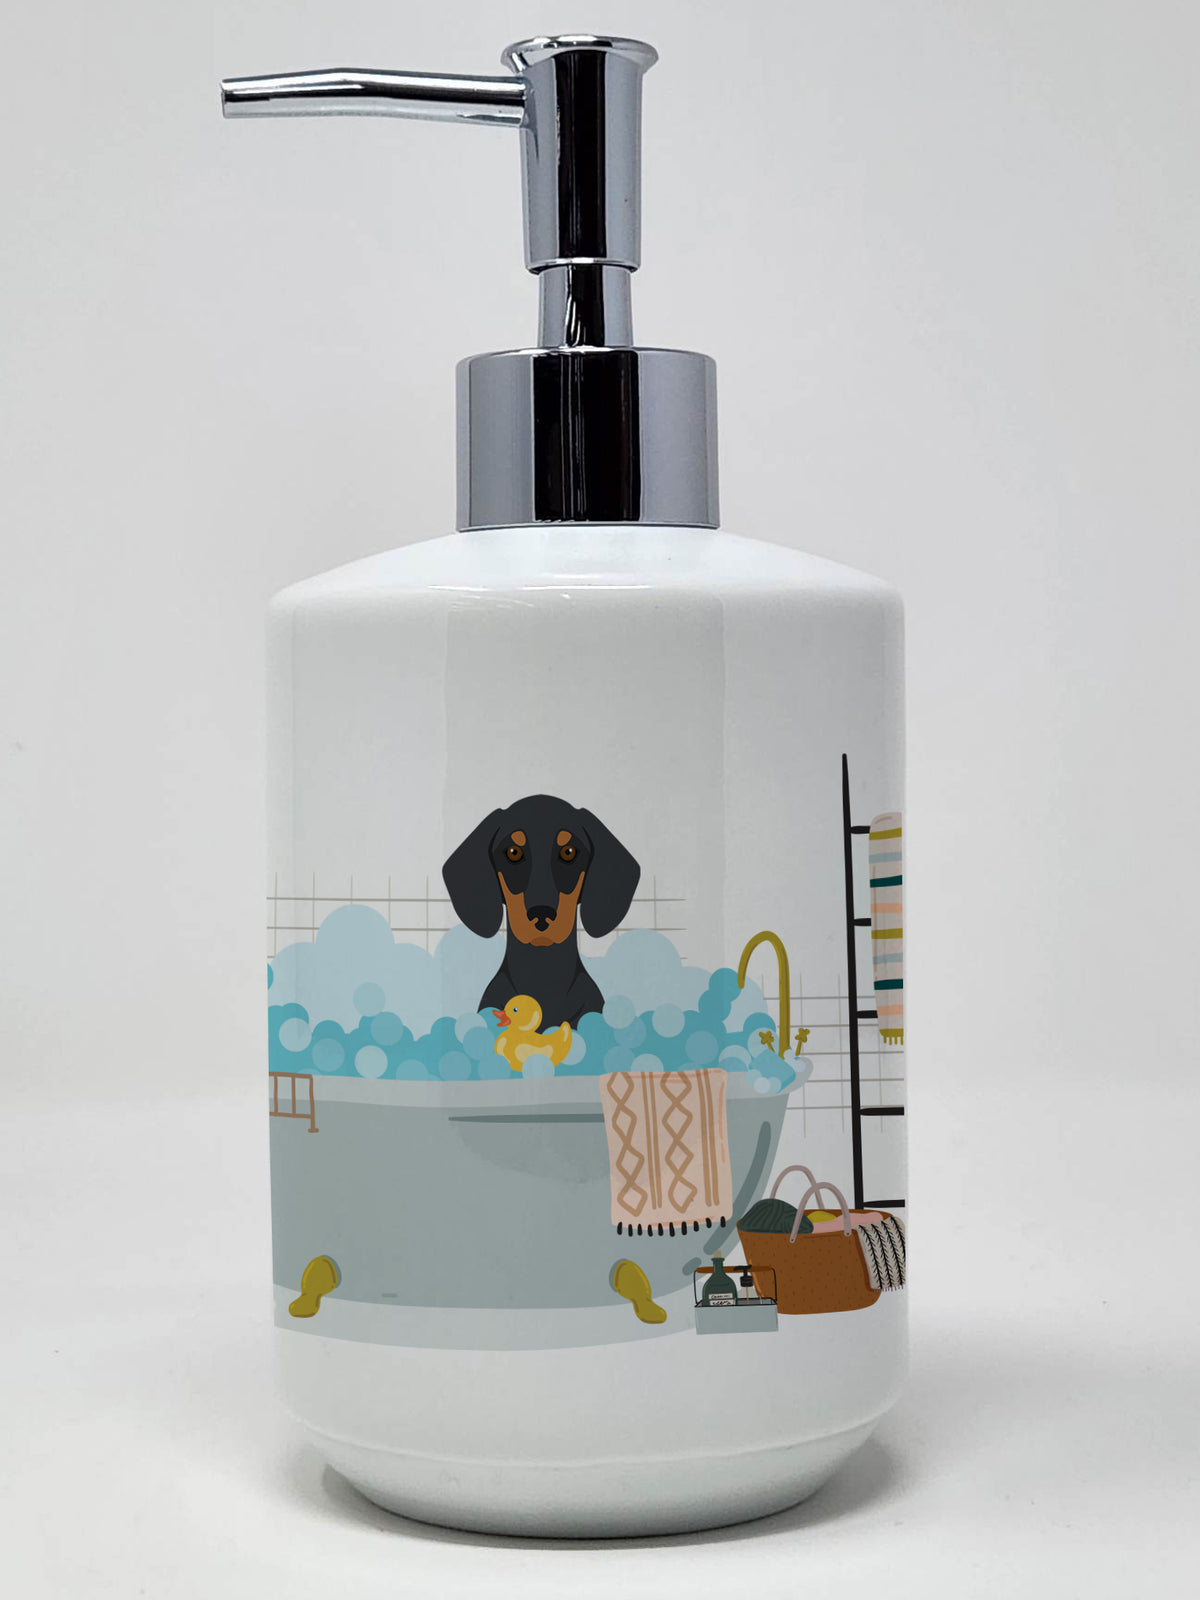 Buy this Black and Tan Dachshund Ceramic Soap Dispenser